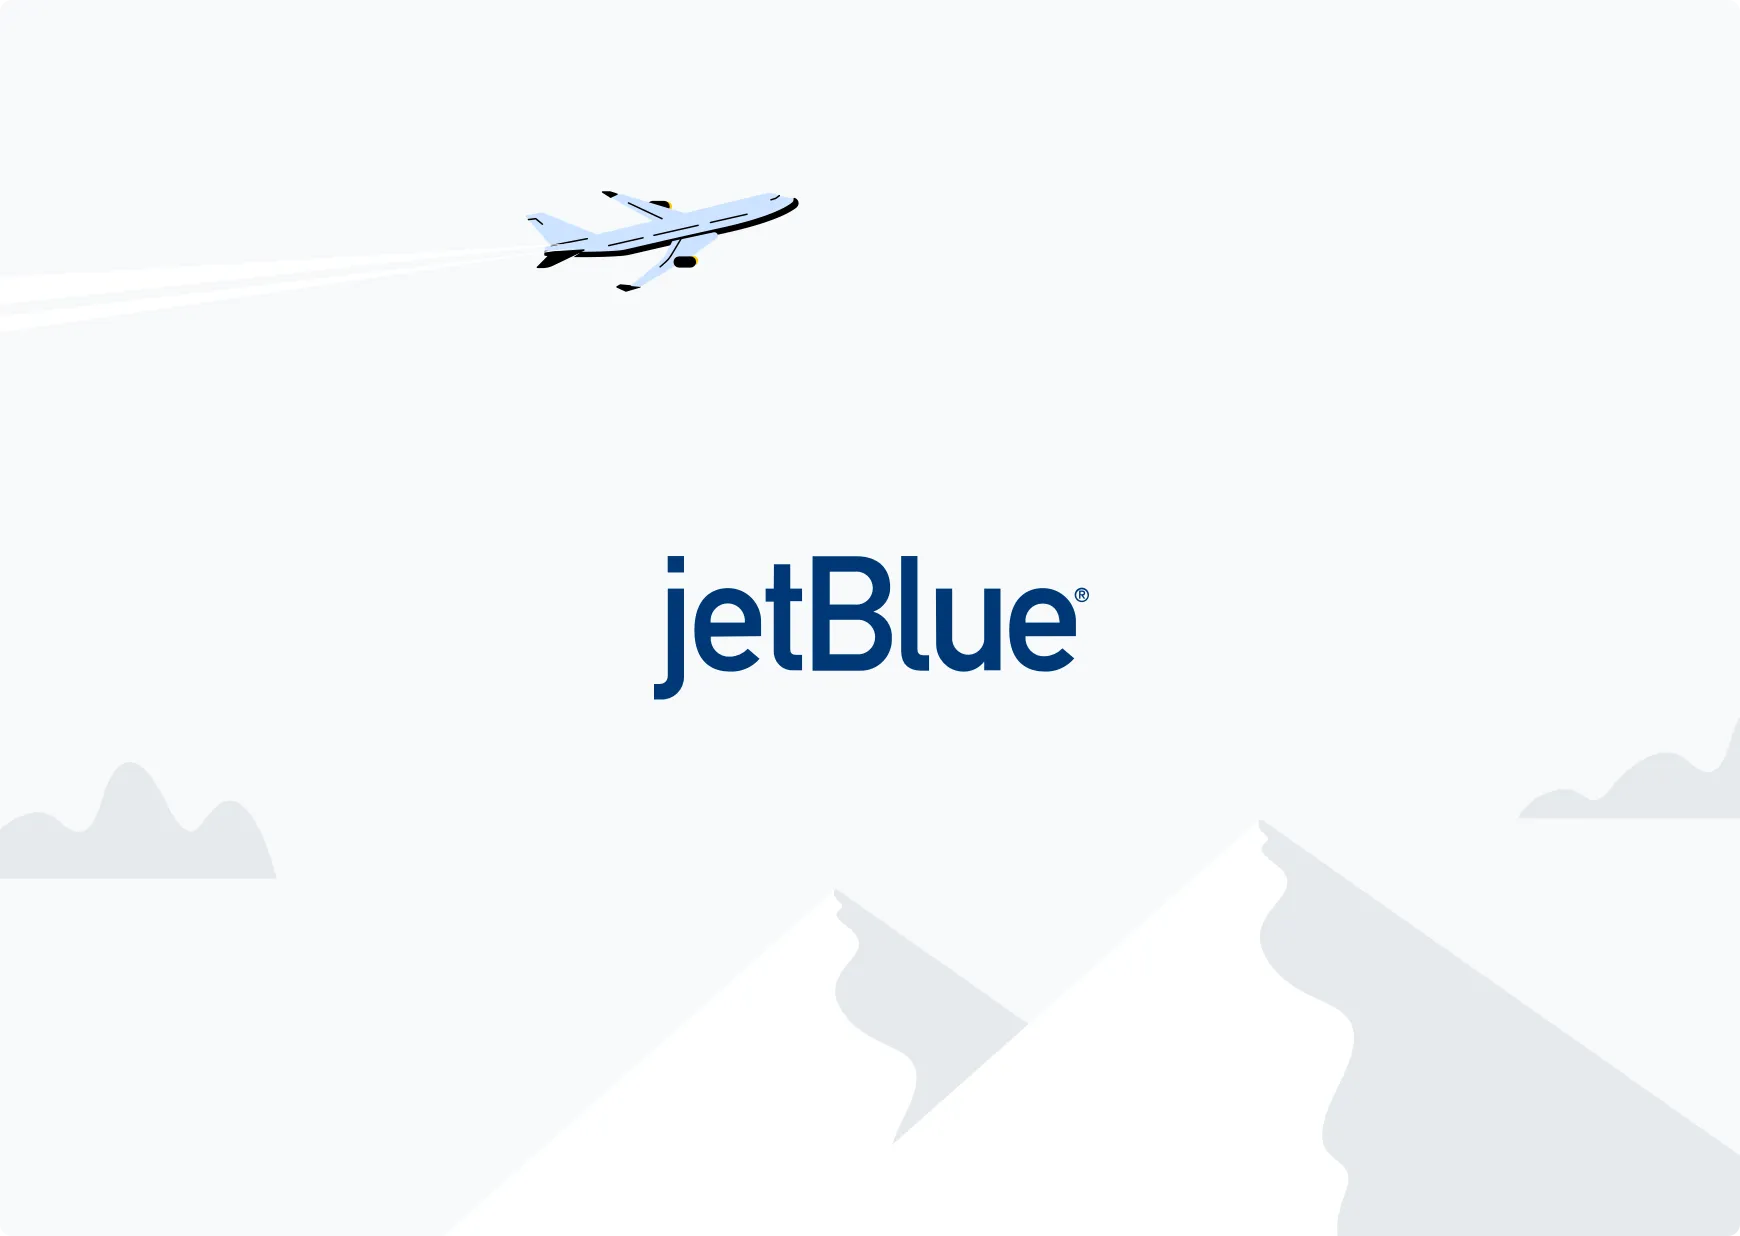 Jetblue graphic